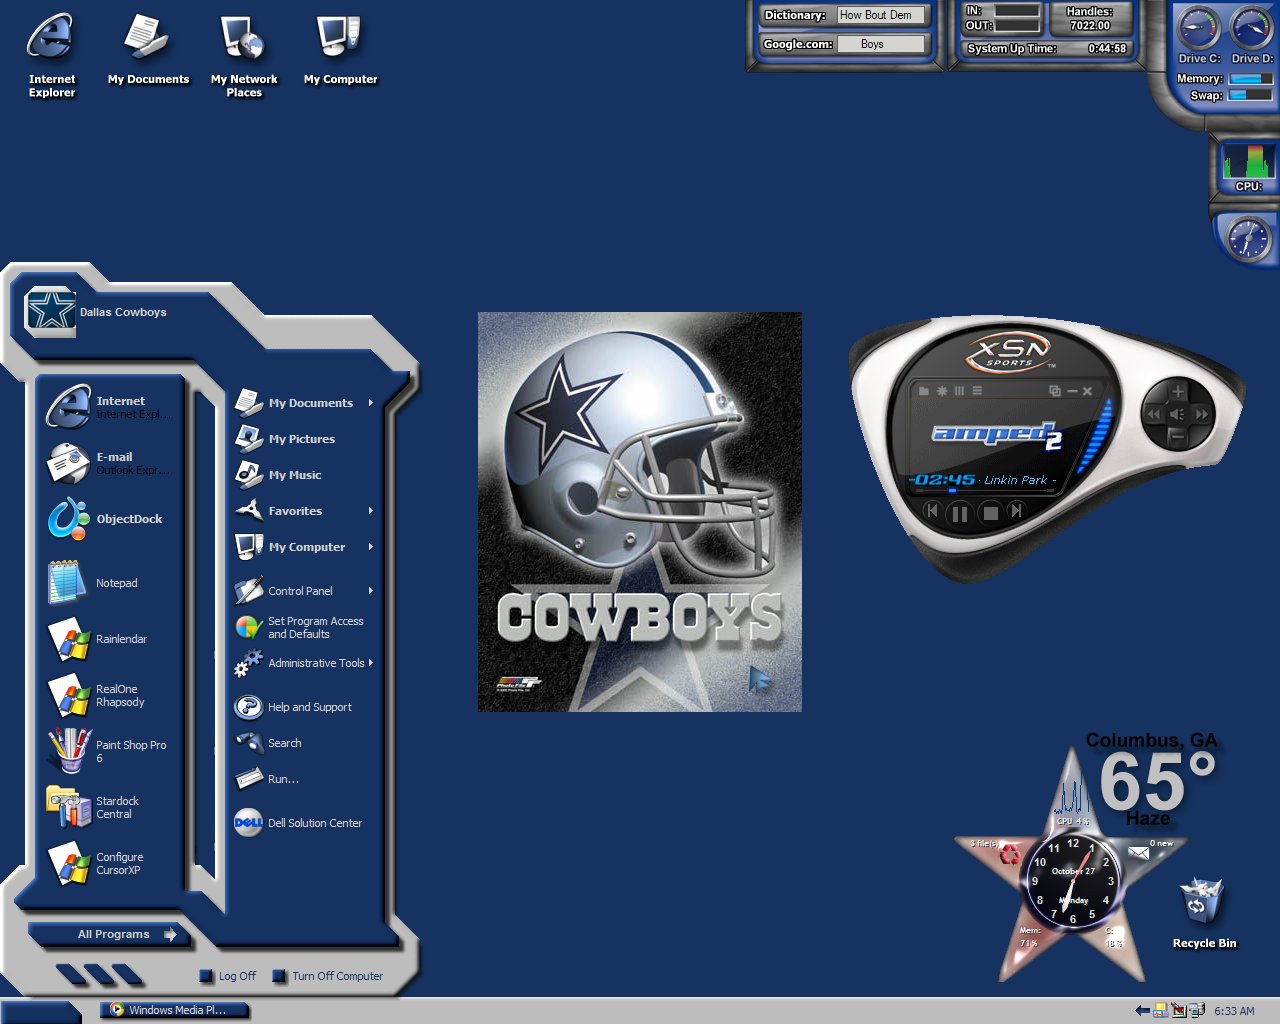 Dallas Cowboys Desktop by celticsfan on